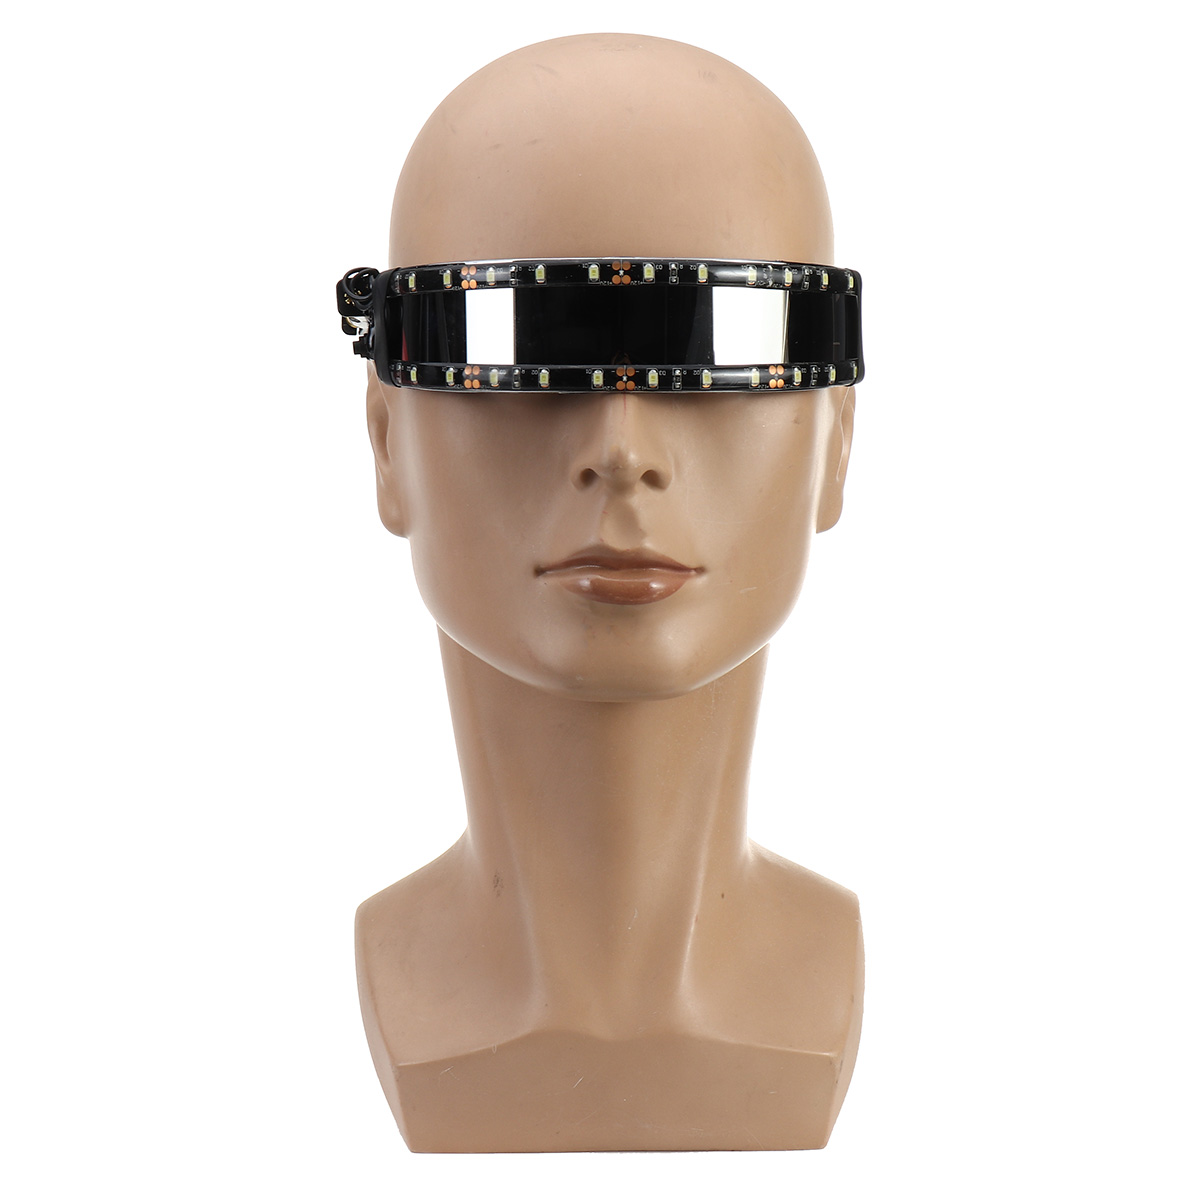 LED-Light-Glasses-Adult-Creative-Eyeglasses-For-Fancy-Dress-Ball-Party-Halloween-1741128-3